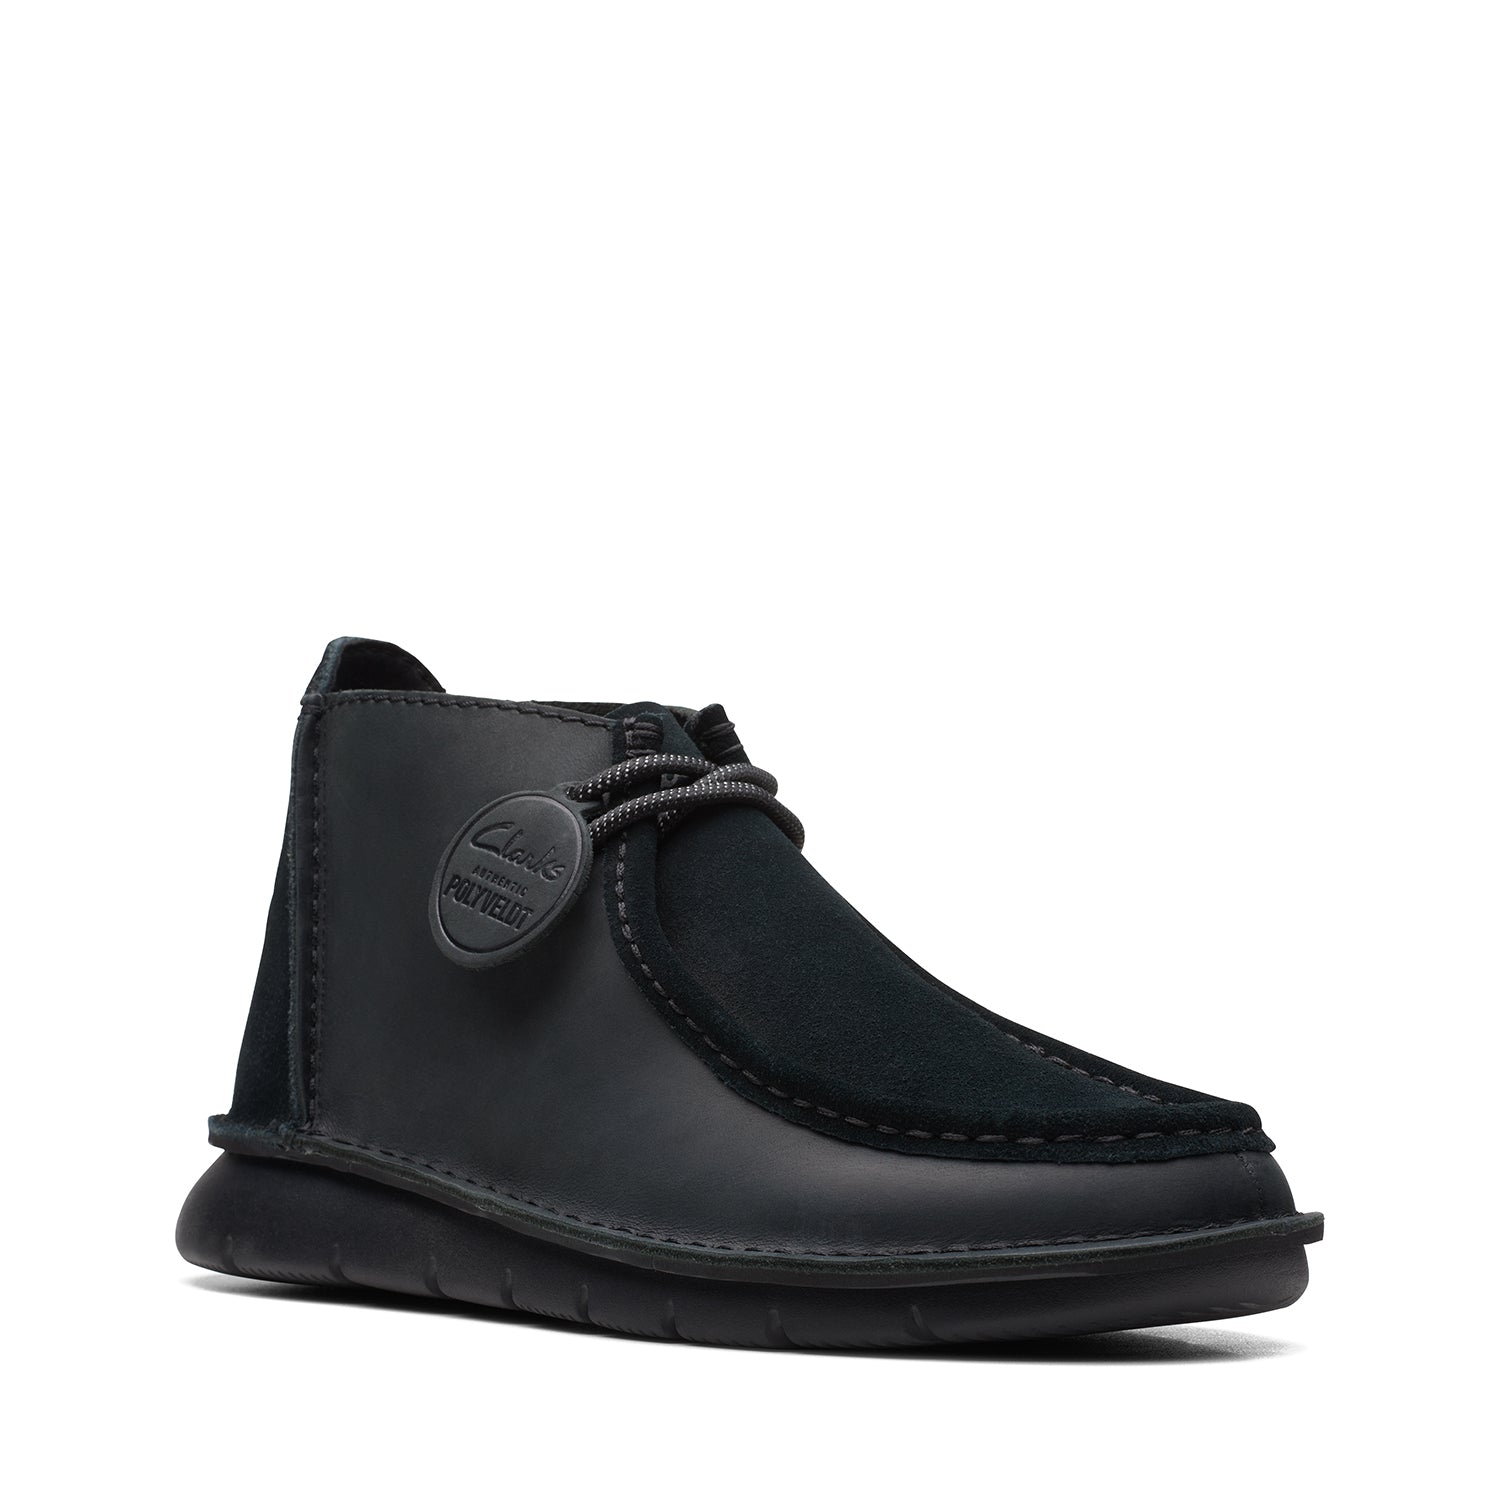 Clarks Colehill Wally Boots - Black Nubuck - 261677497 - G Width (Standard Fit)